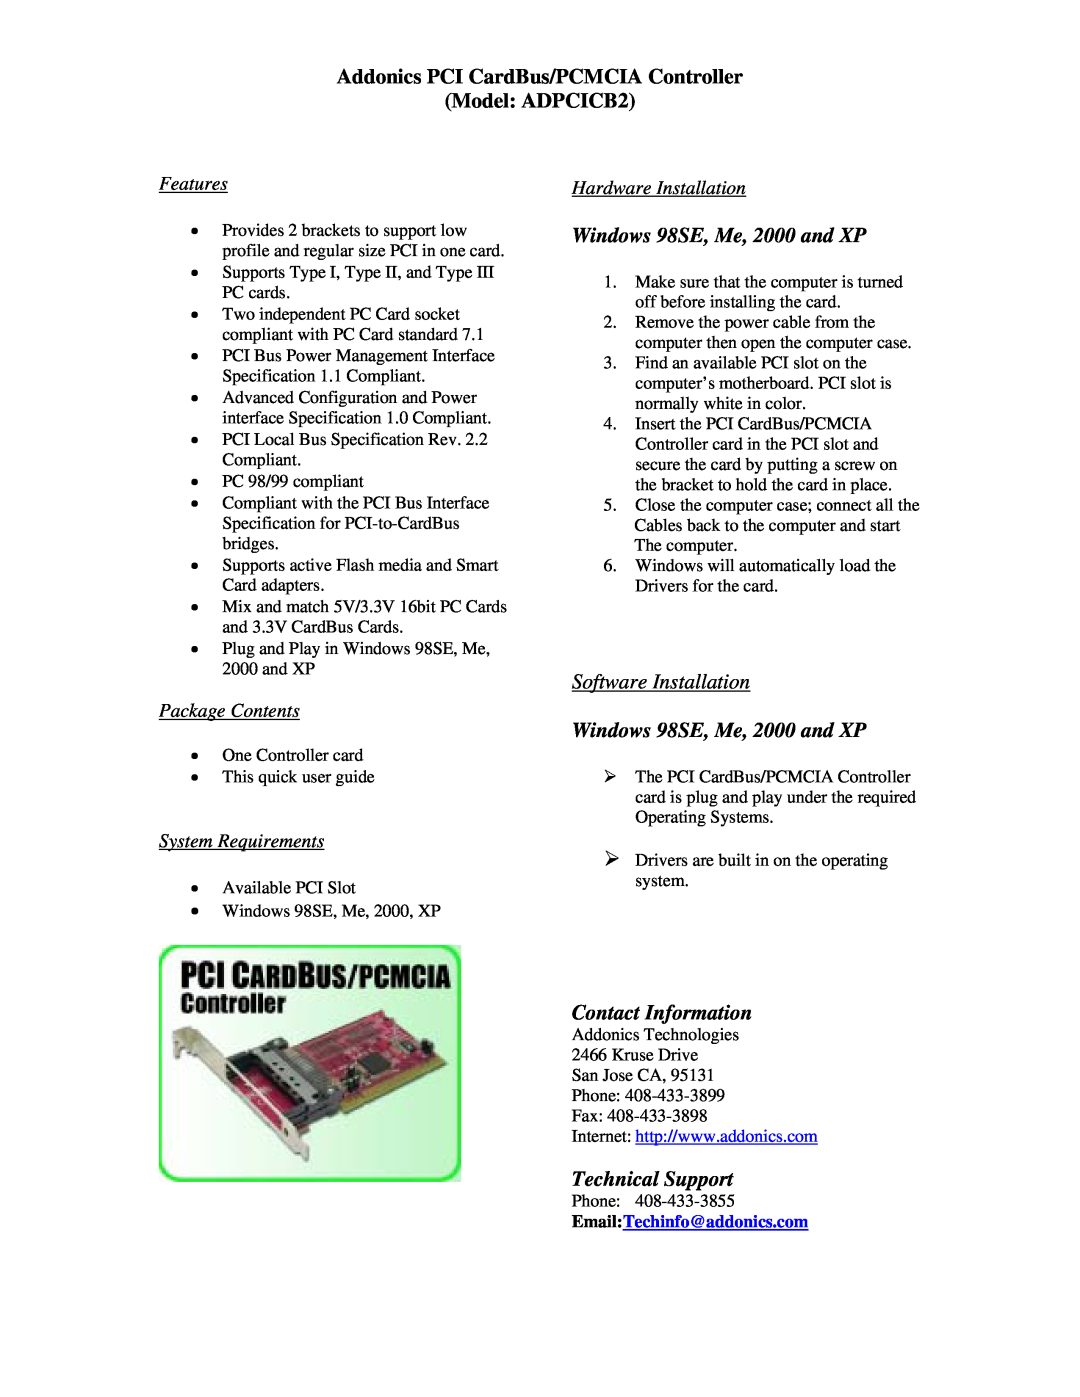 Addonics Technologies manual Addonics PCI CardBus/PCMCIA Controller Model ADPCICB2, Windows 98SE, Me, 2000 and XP 